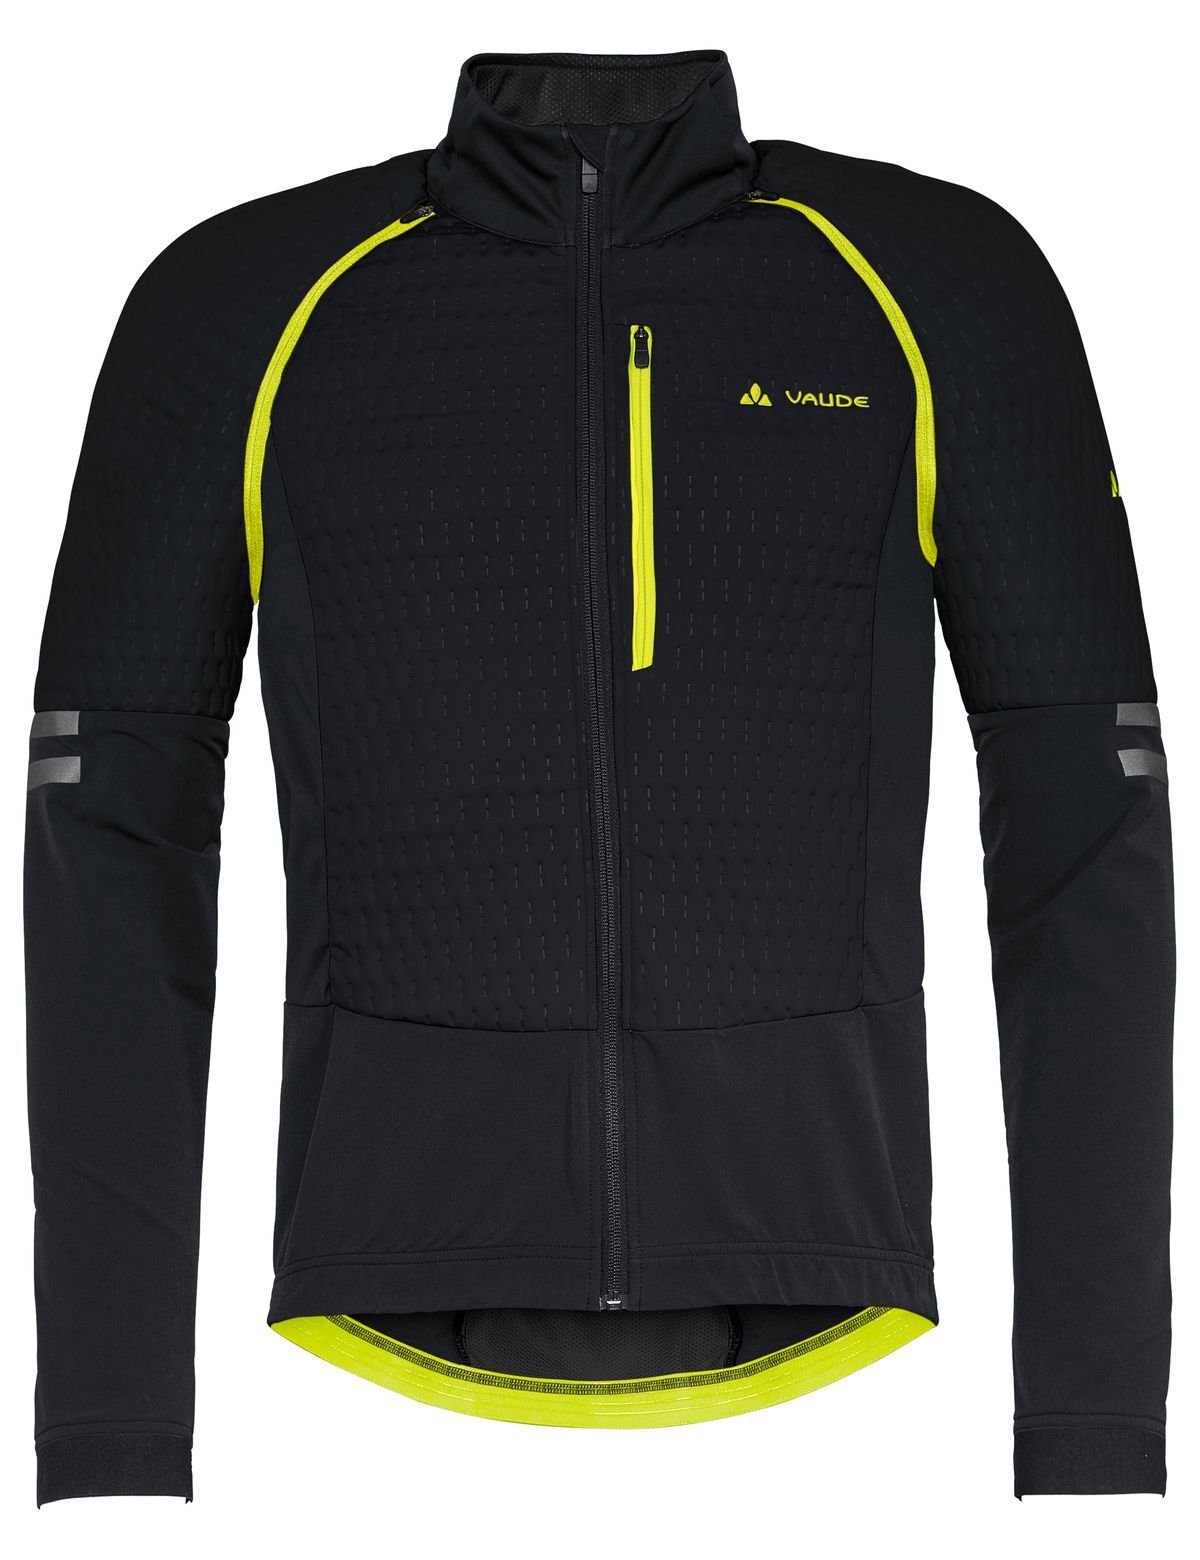 Vaude Pro Insulation ZO Jacket - Cycling jacket - Men's